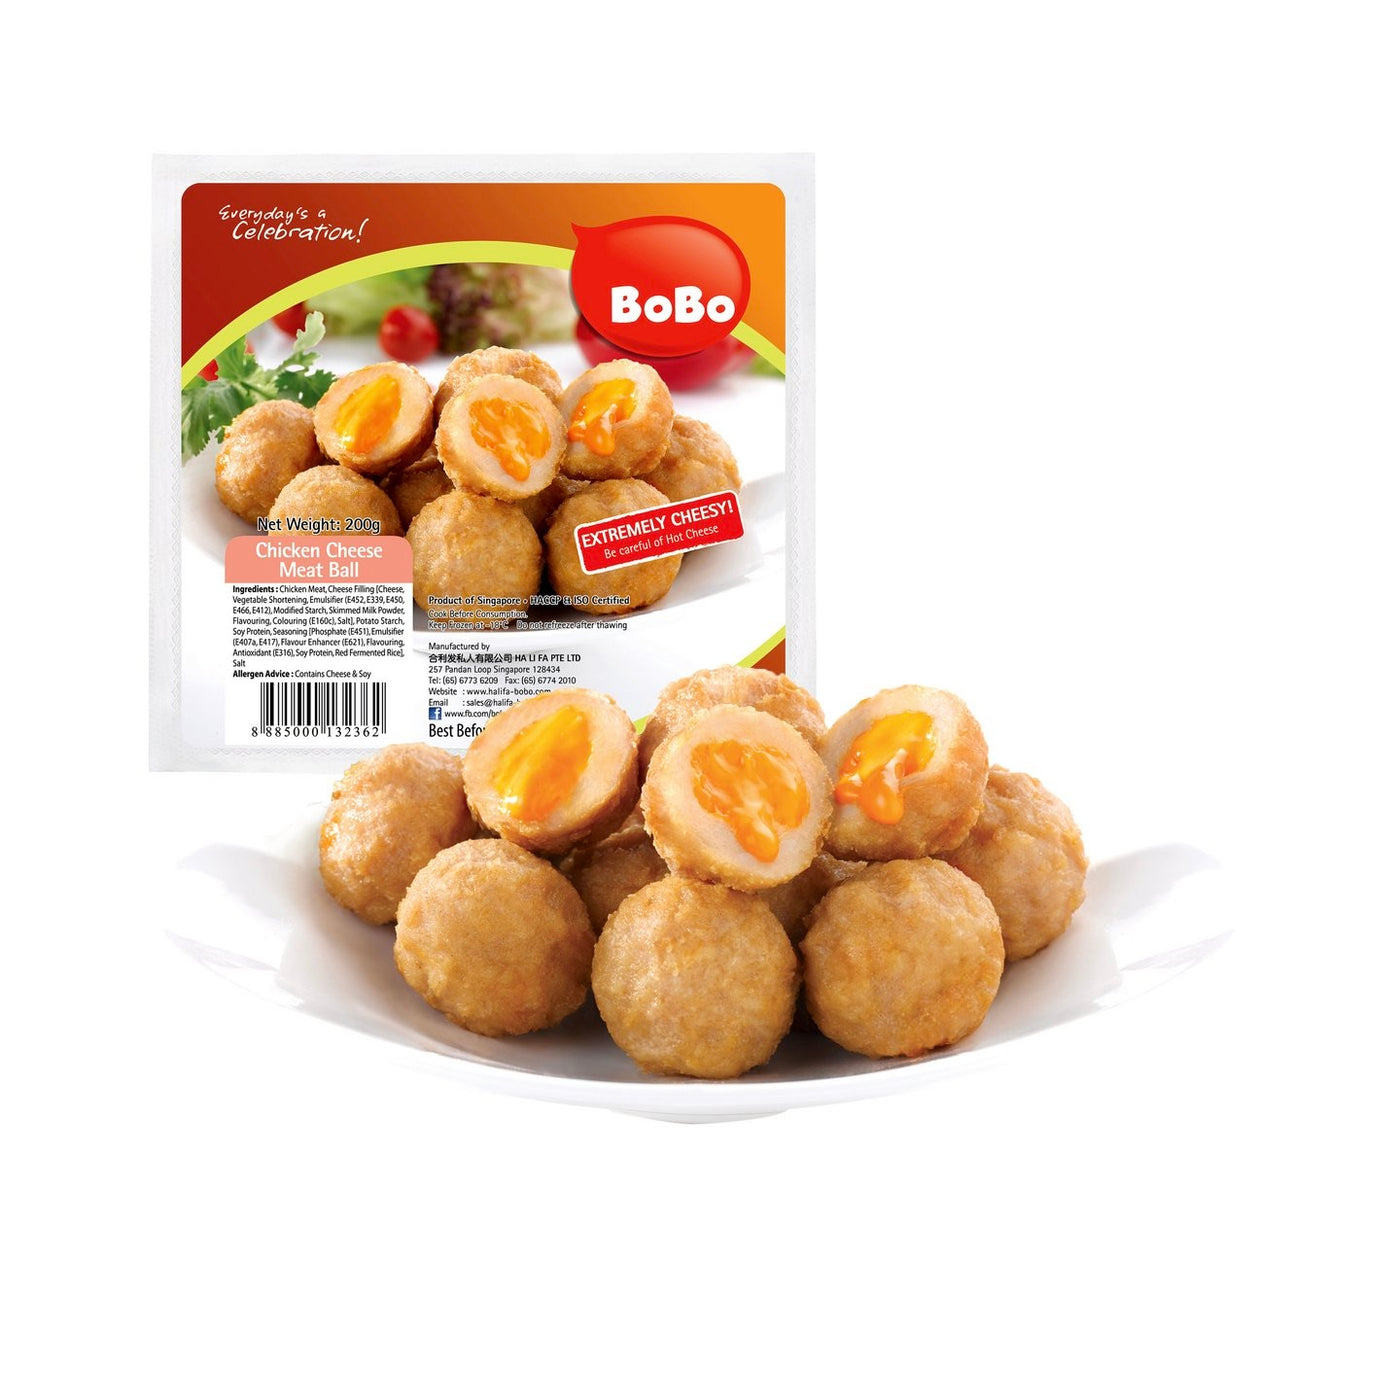 Bobo cheese Chicken Meatball | Frozen | 1kg